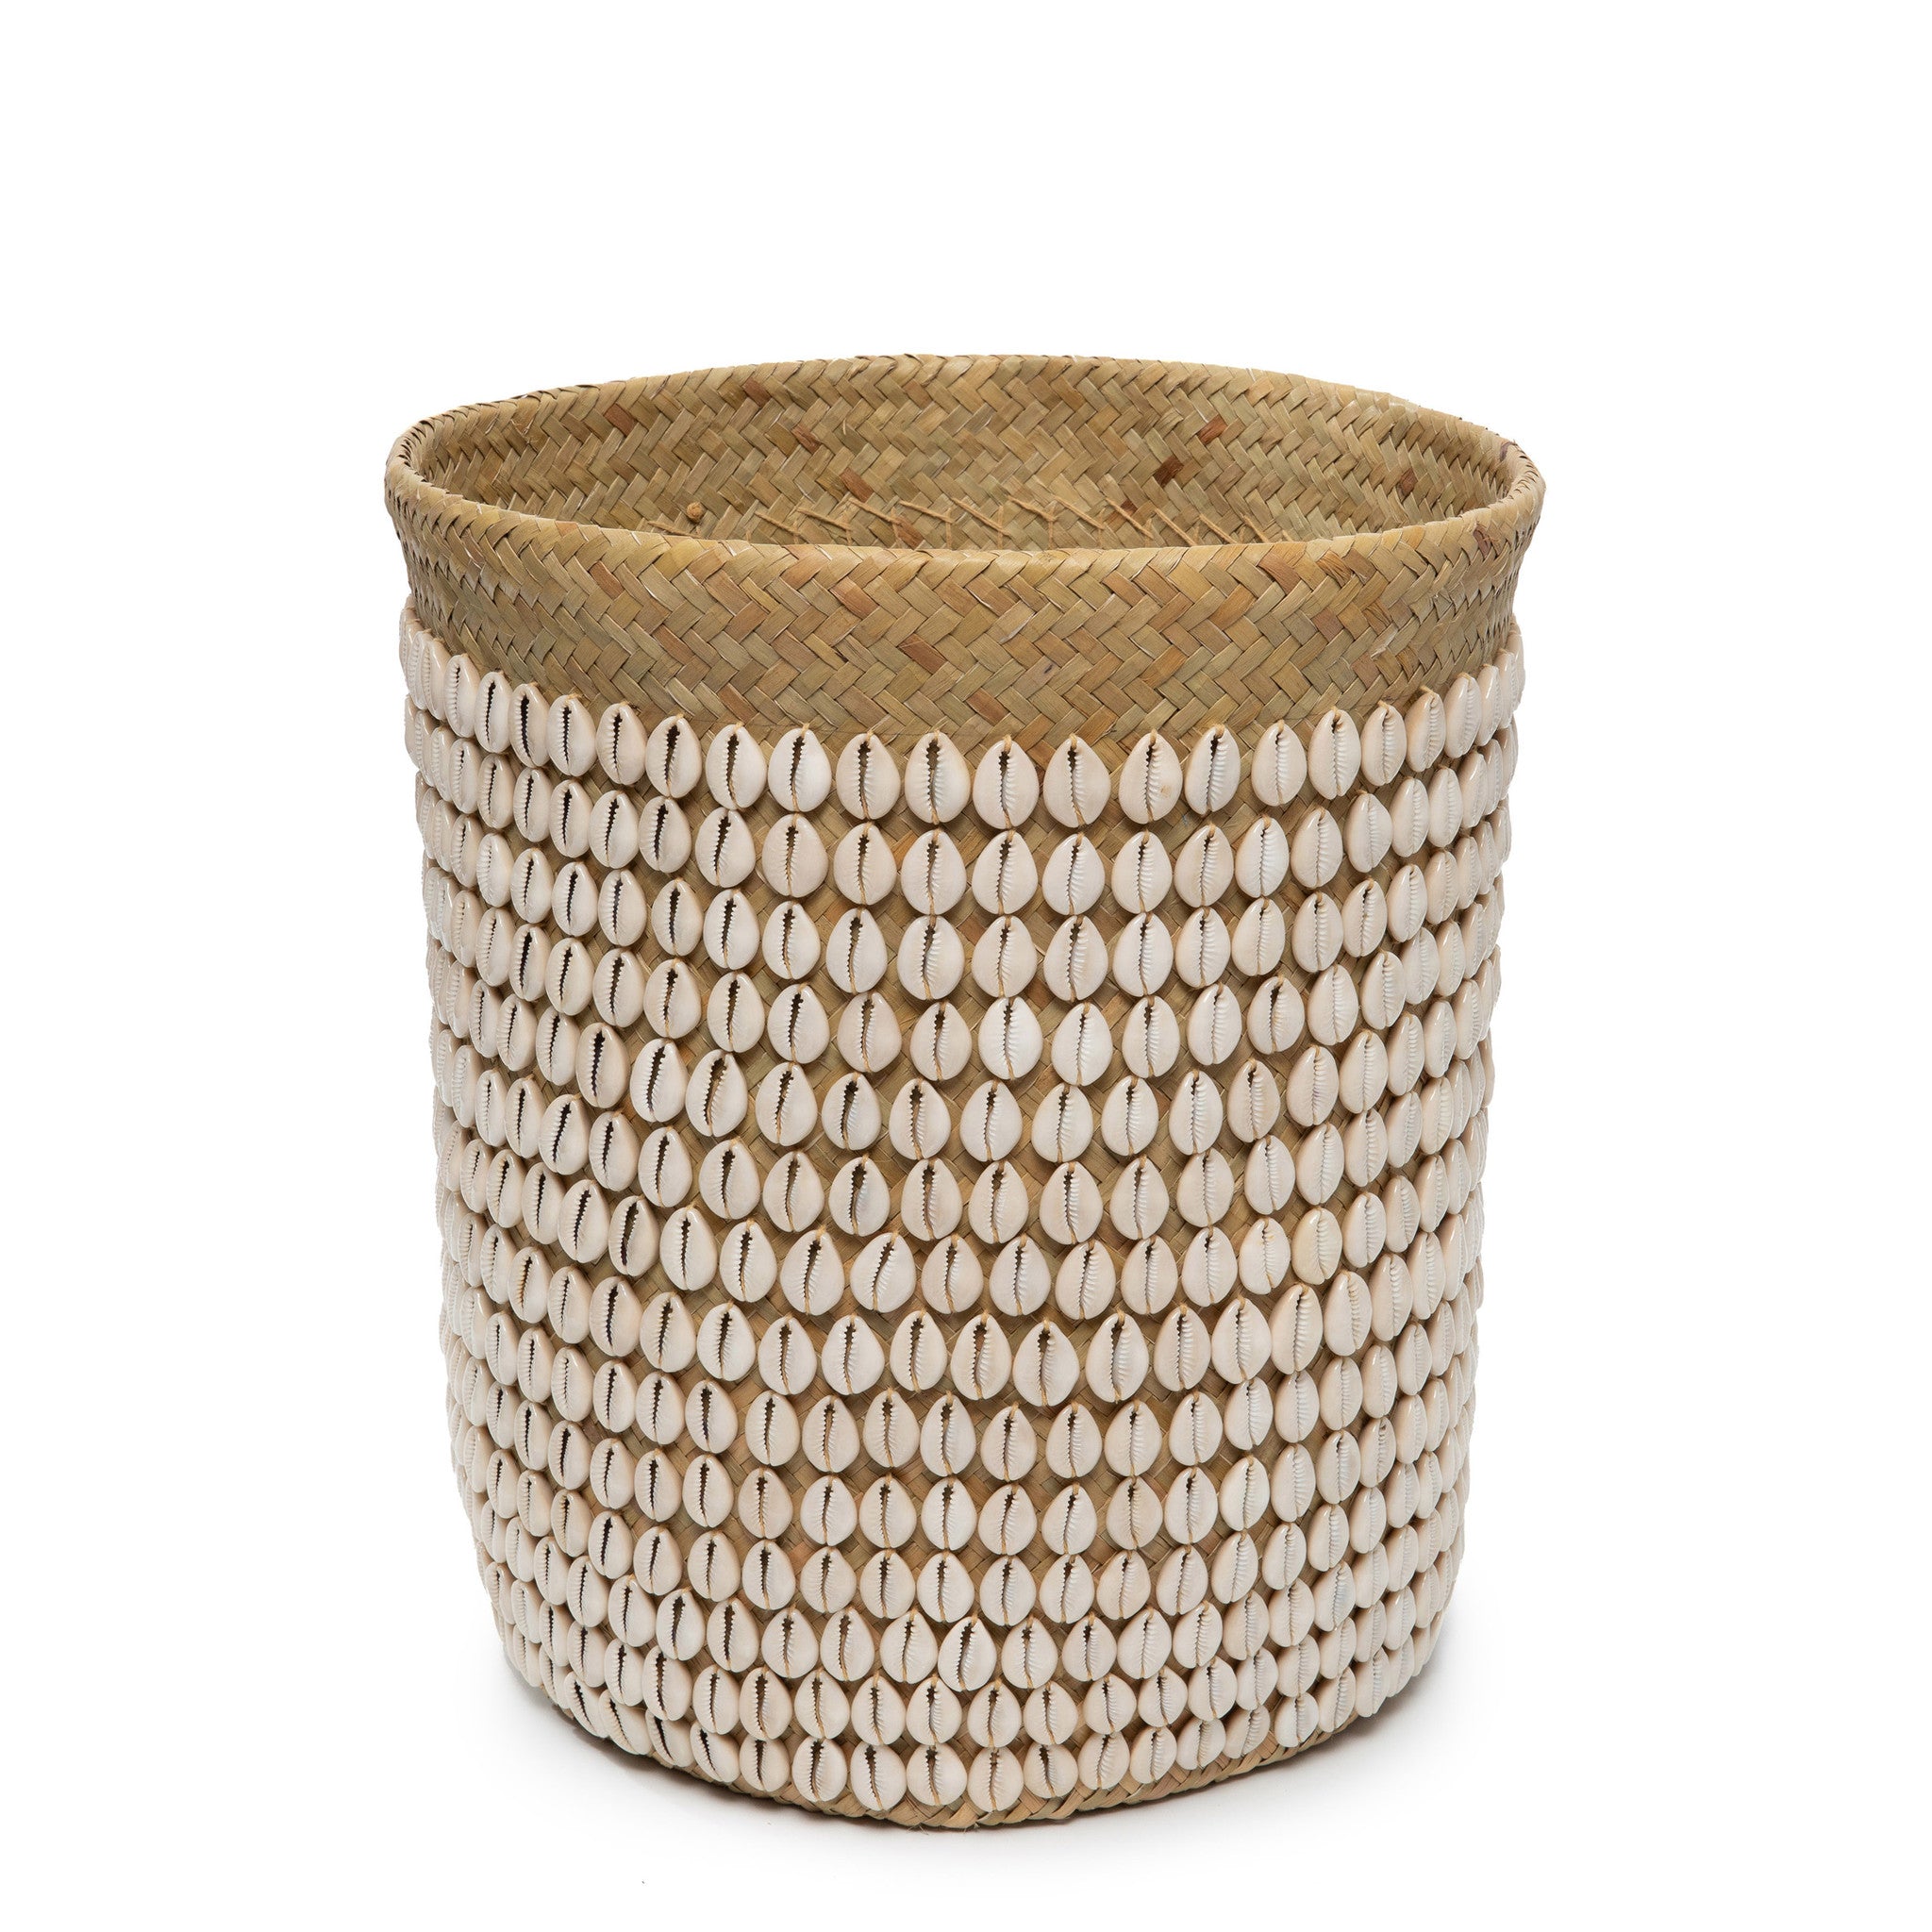 THE PANDAN Basket white shell colour, front view